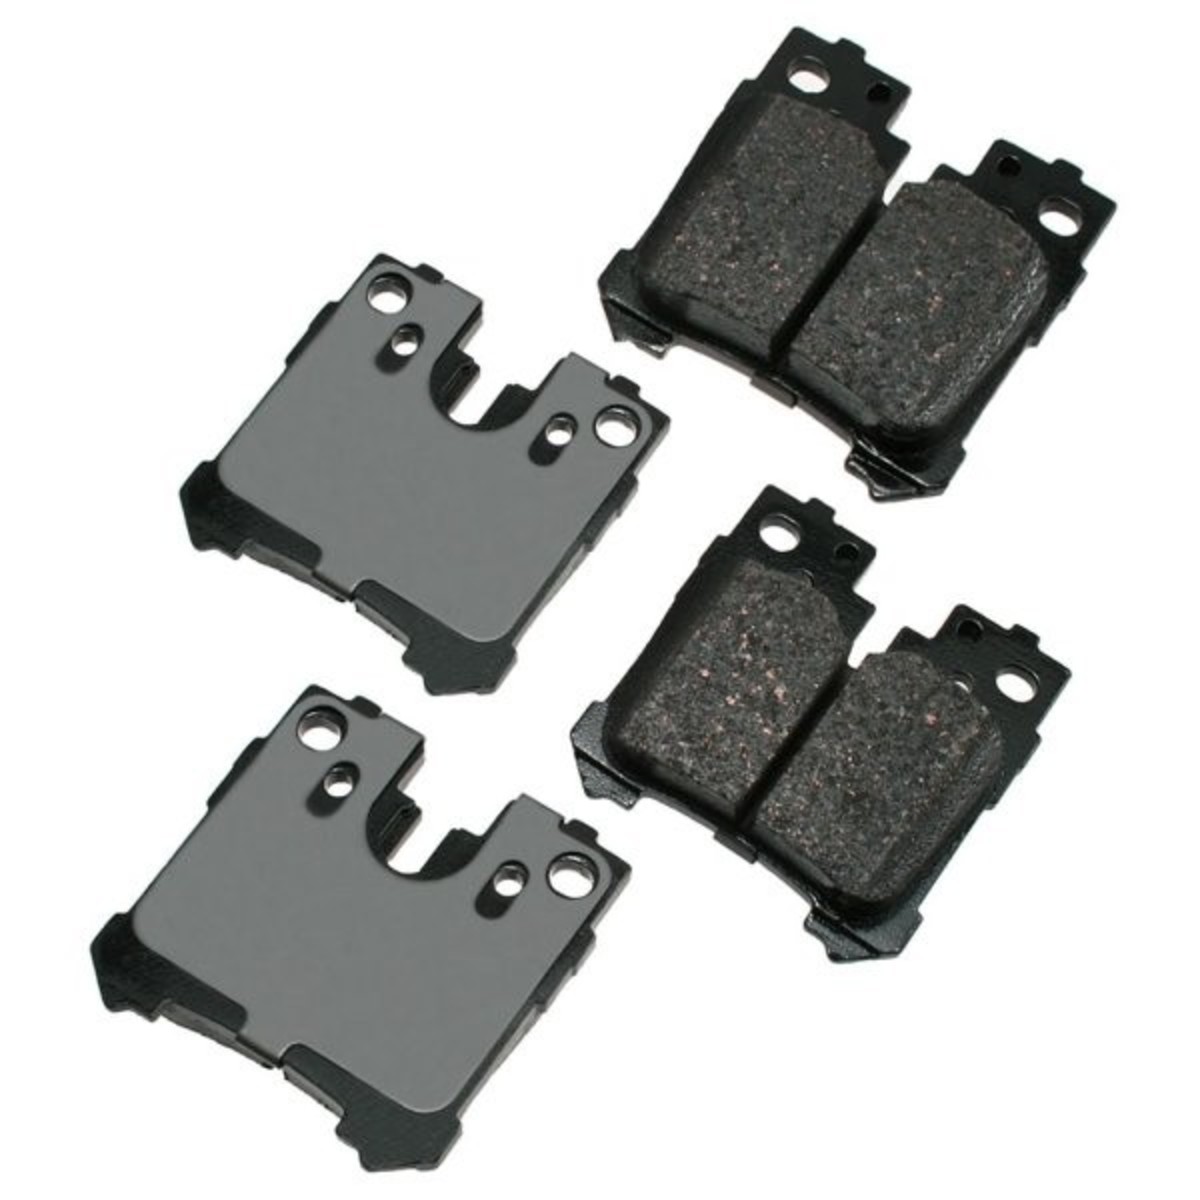 Akebono ProACT ceramic brake pads for the LS 460.